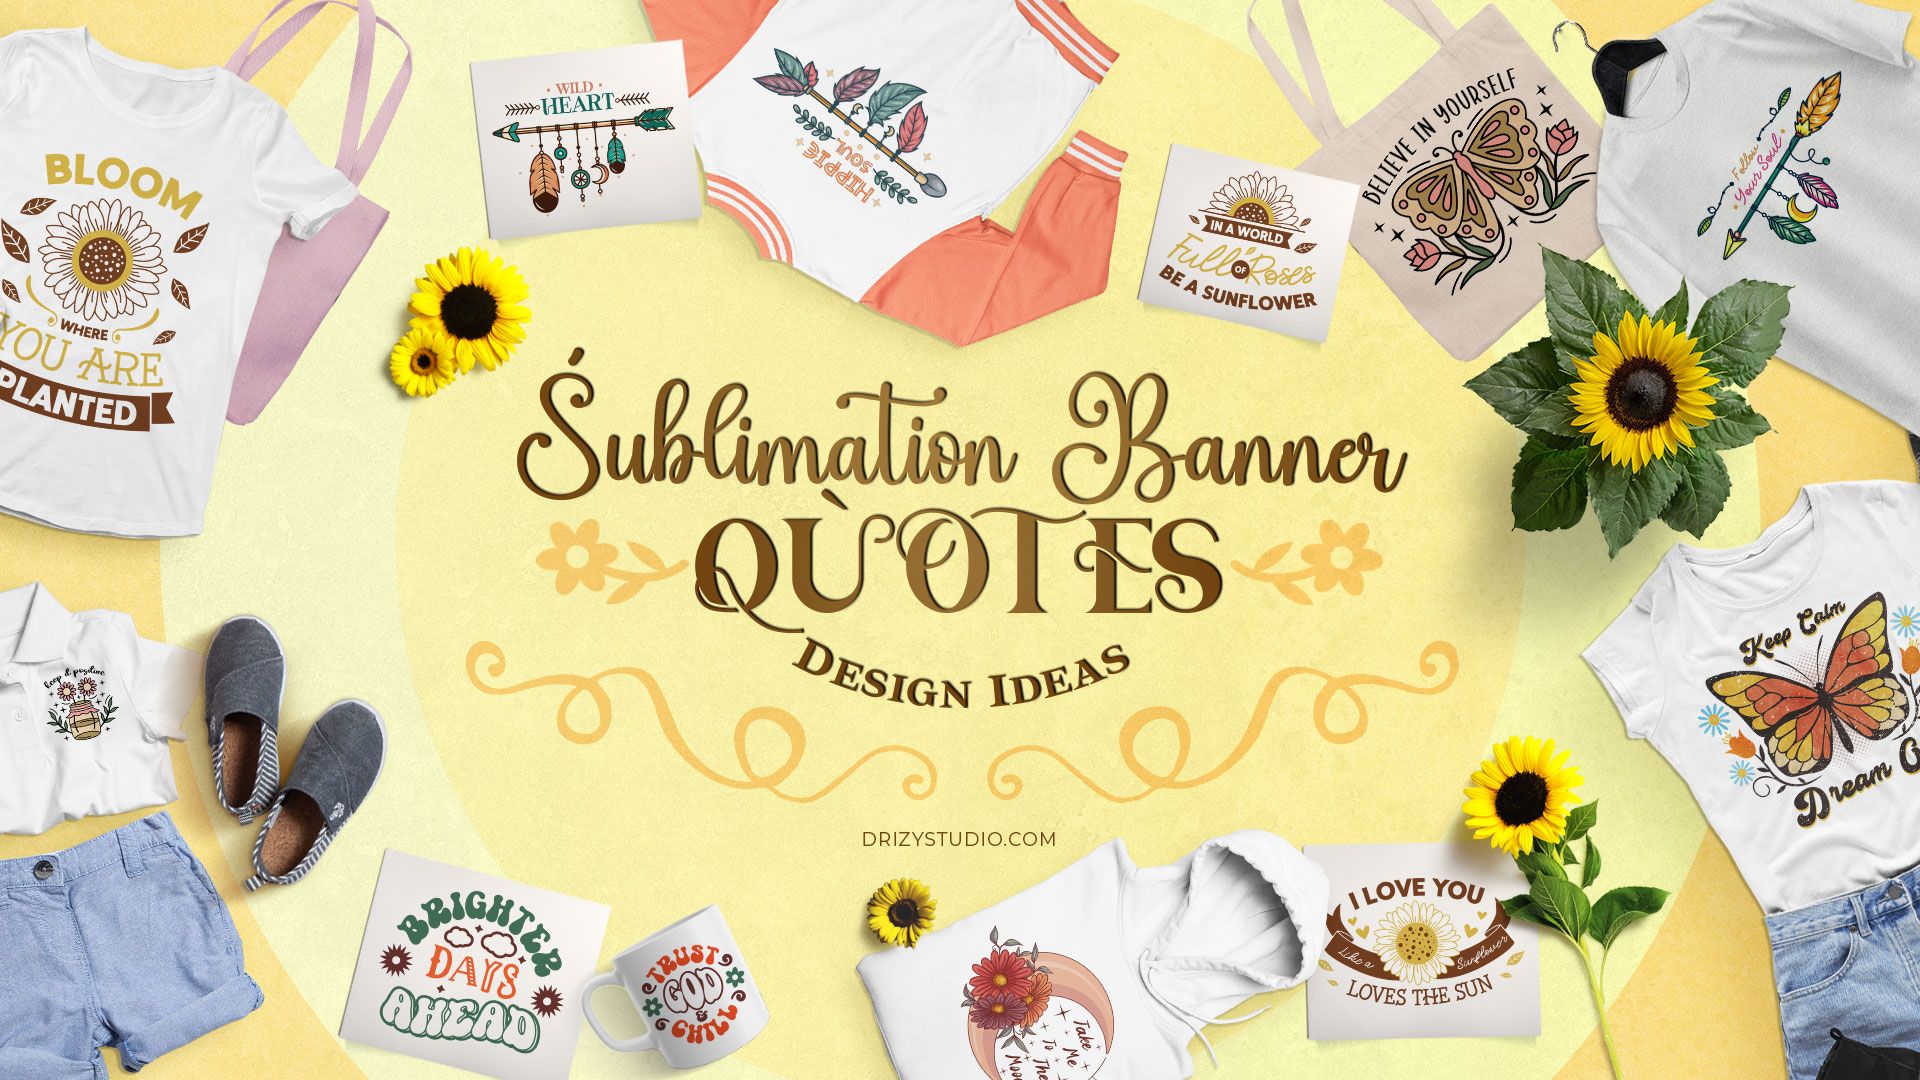 Sublimation Banner Quotes Design Ideas